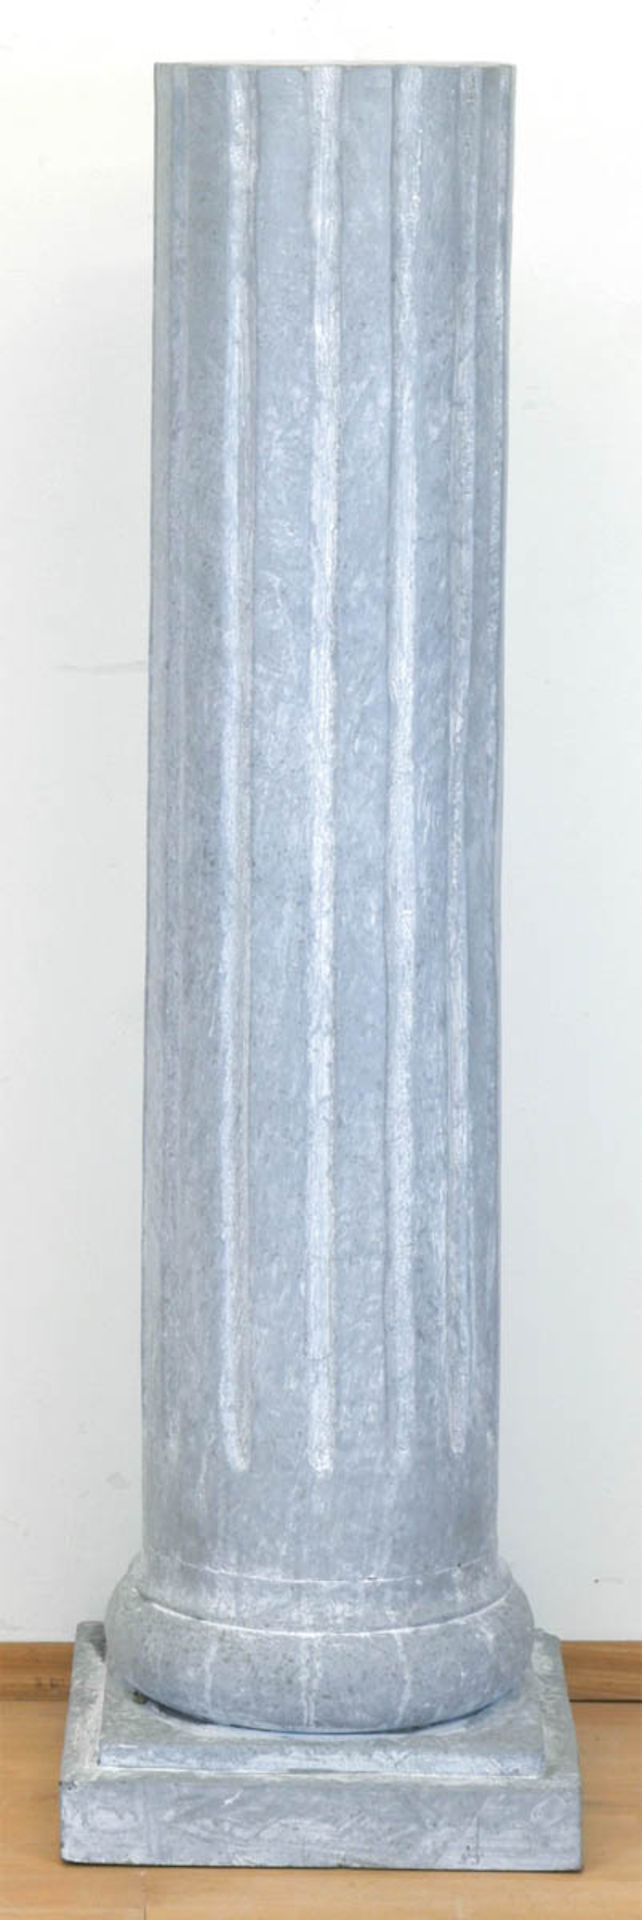 Säule, Holz, grau gefaßt, über 4-eckigem Stand kannelierte Säule, 120x35x36 cm